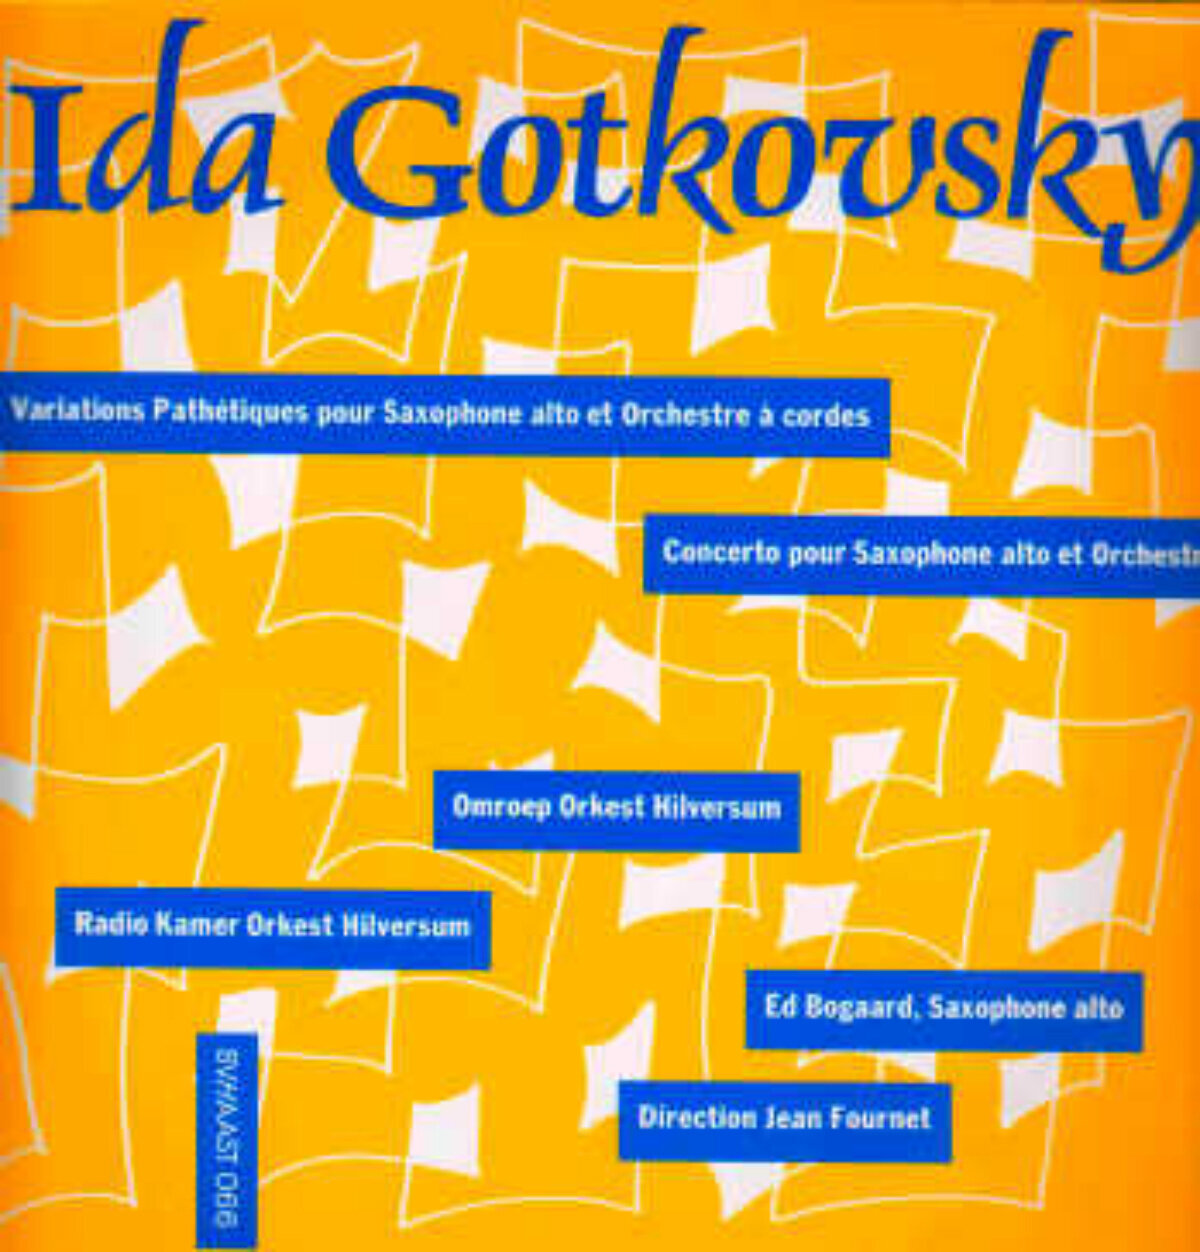 Vinyl Record Ida Gotkovsky Variations Pathétiques (12'' LP)